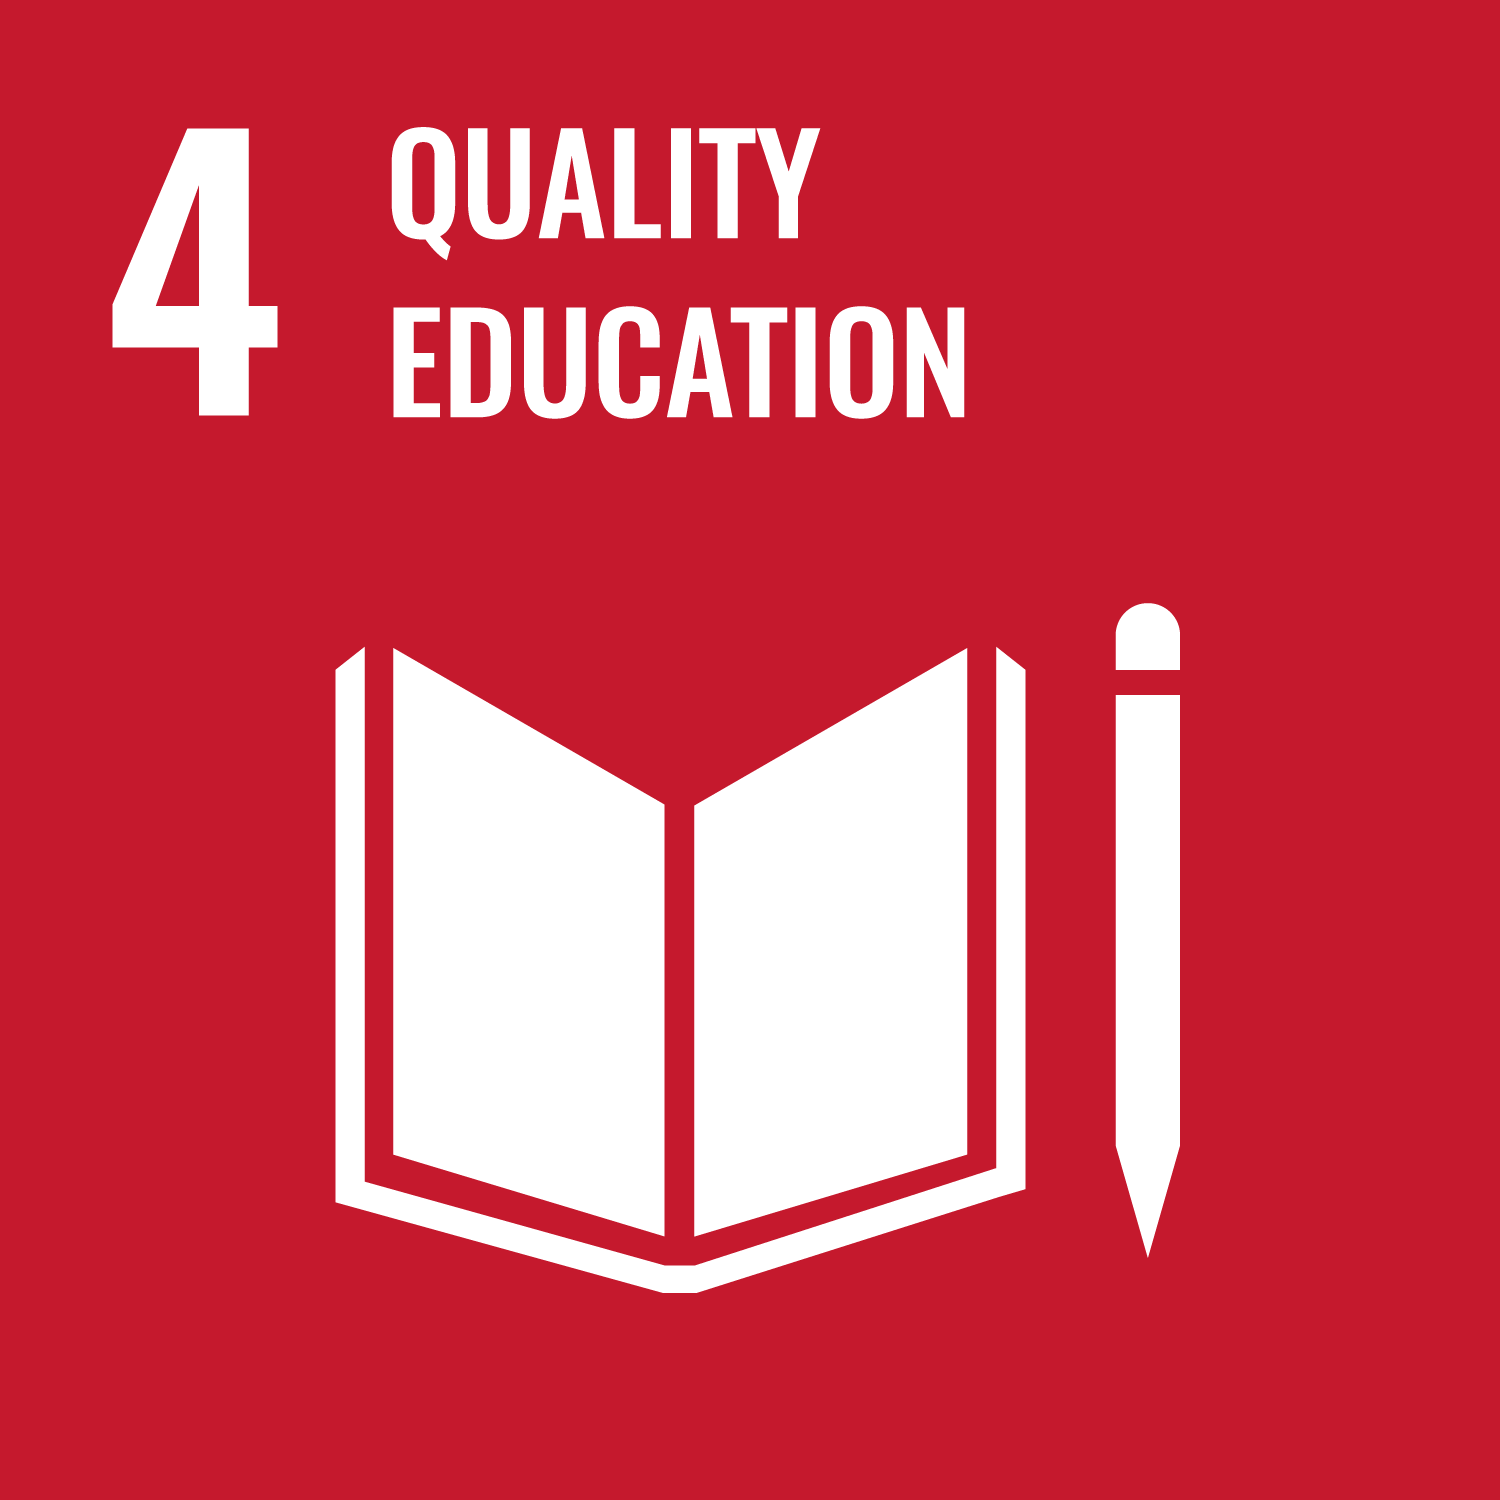 Sustainable Development Goal: SDG 4 "Quality Education"